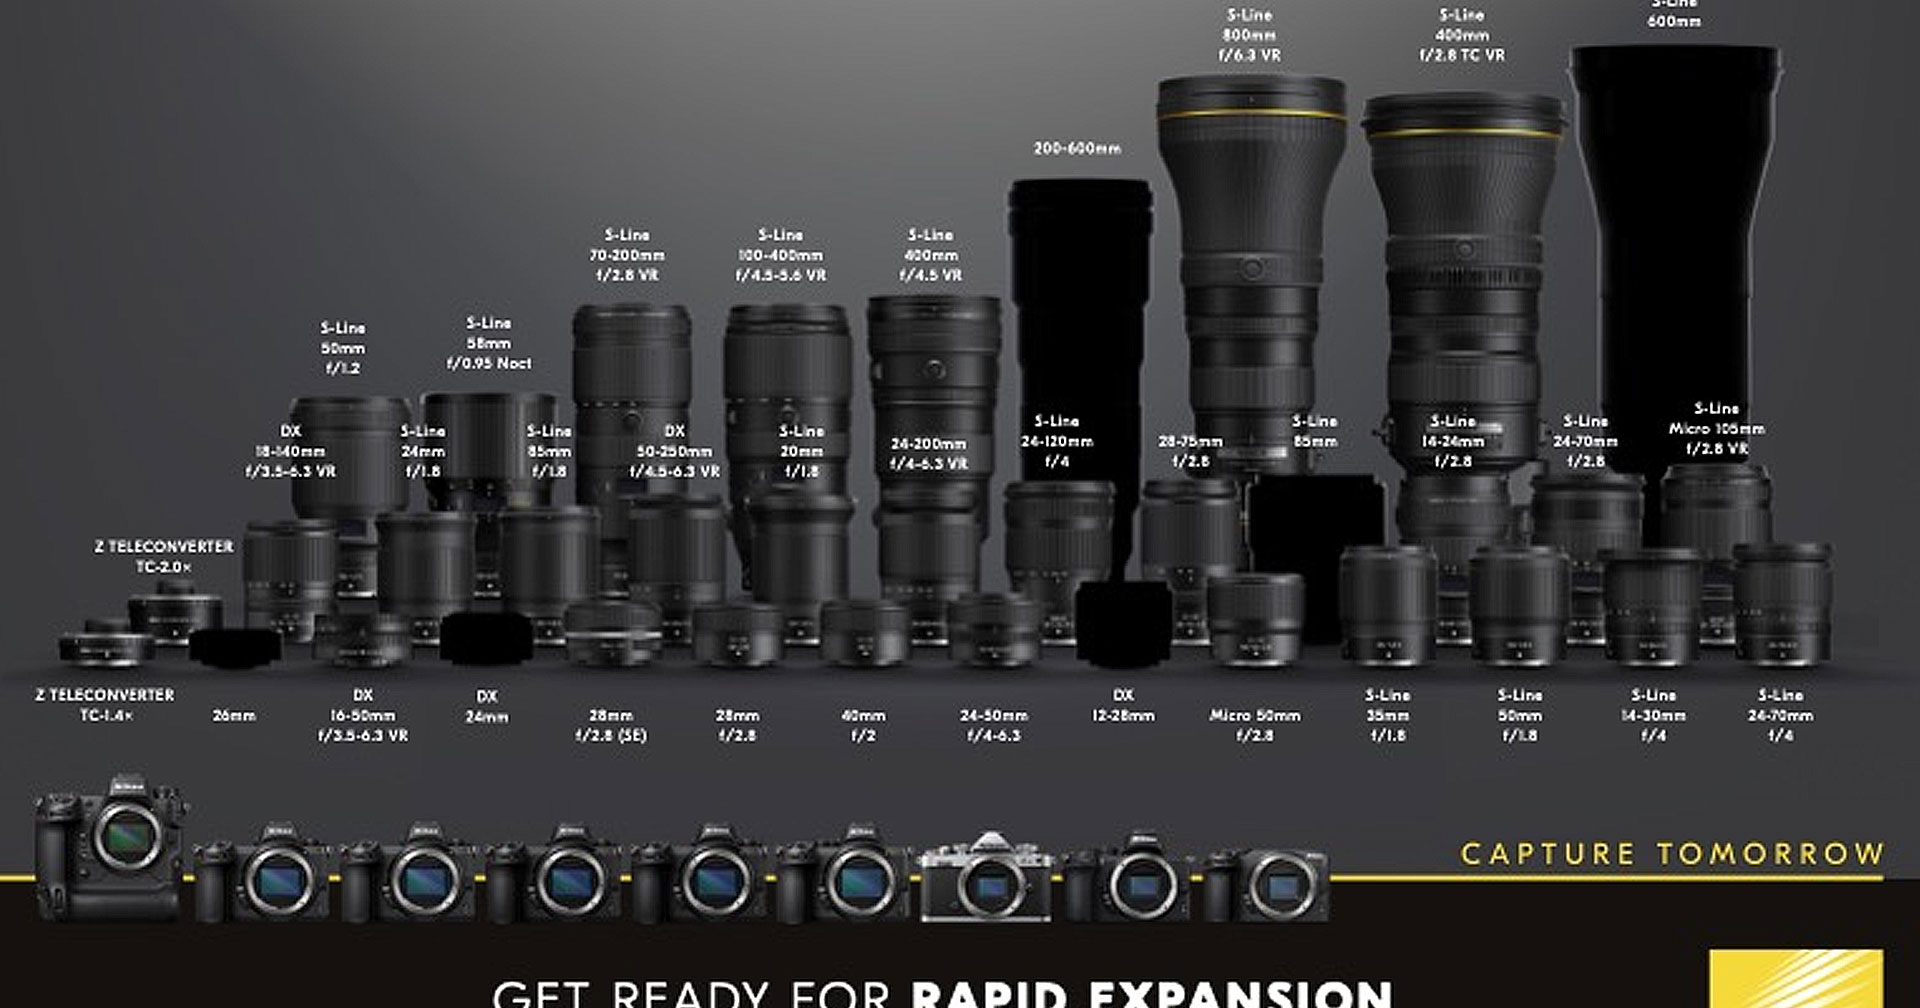 Nikon อัปเดต roadmap เลนส์ล่าสุด จะมีเลนส์ Z-mount ให้เลือกใช้ทั้งหมด 34 รุ่น ภายในสิ้นปี 2023